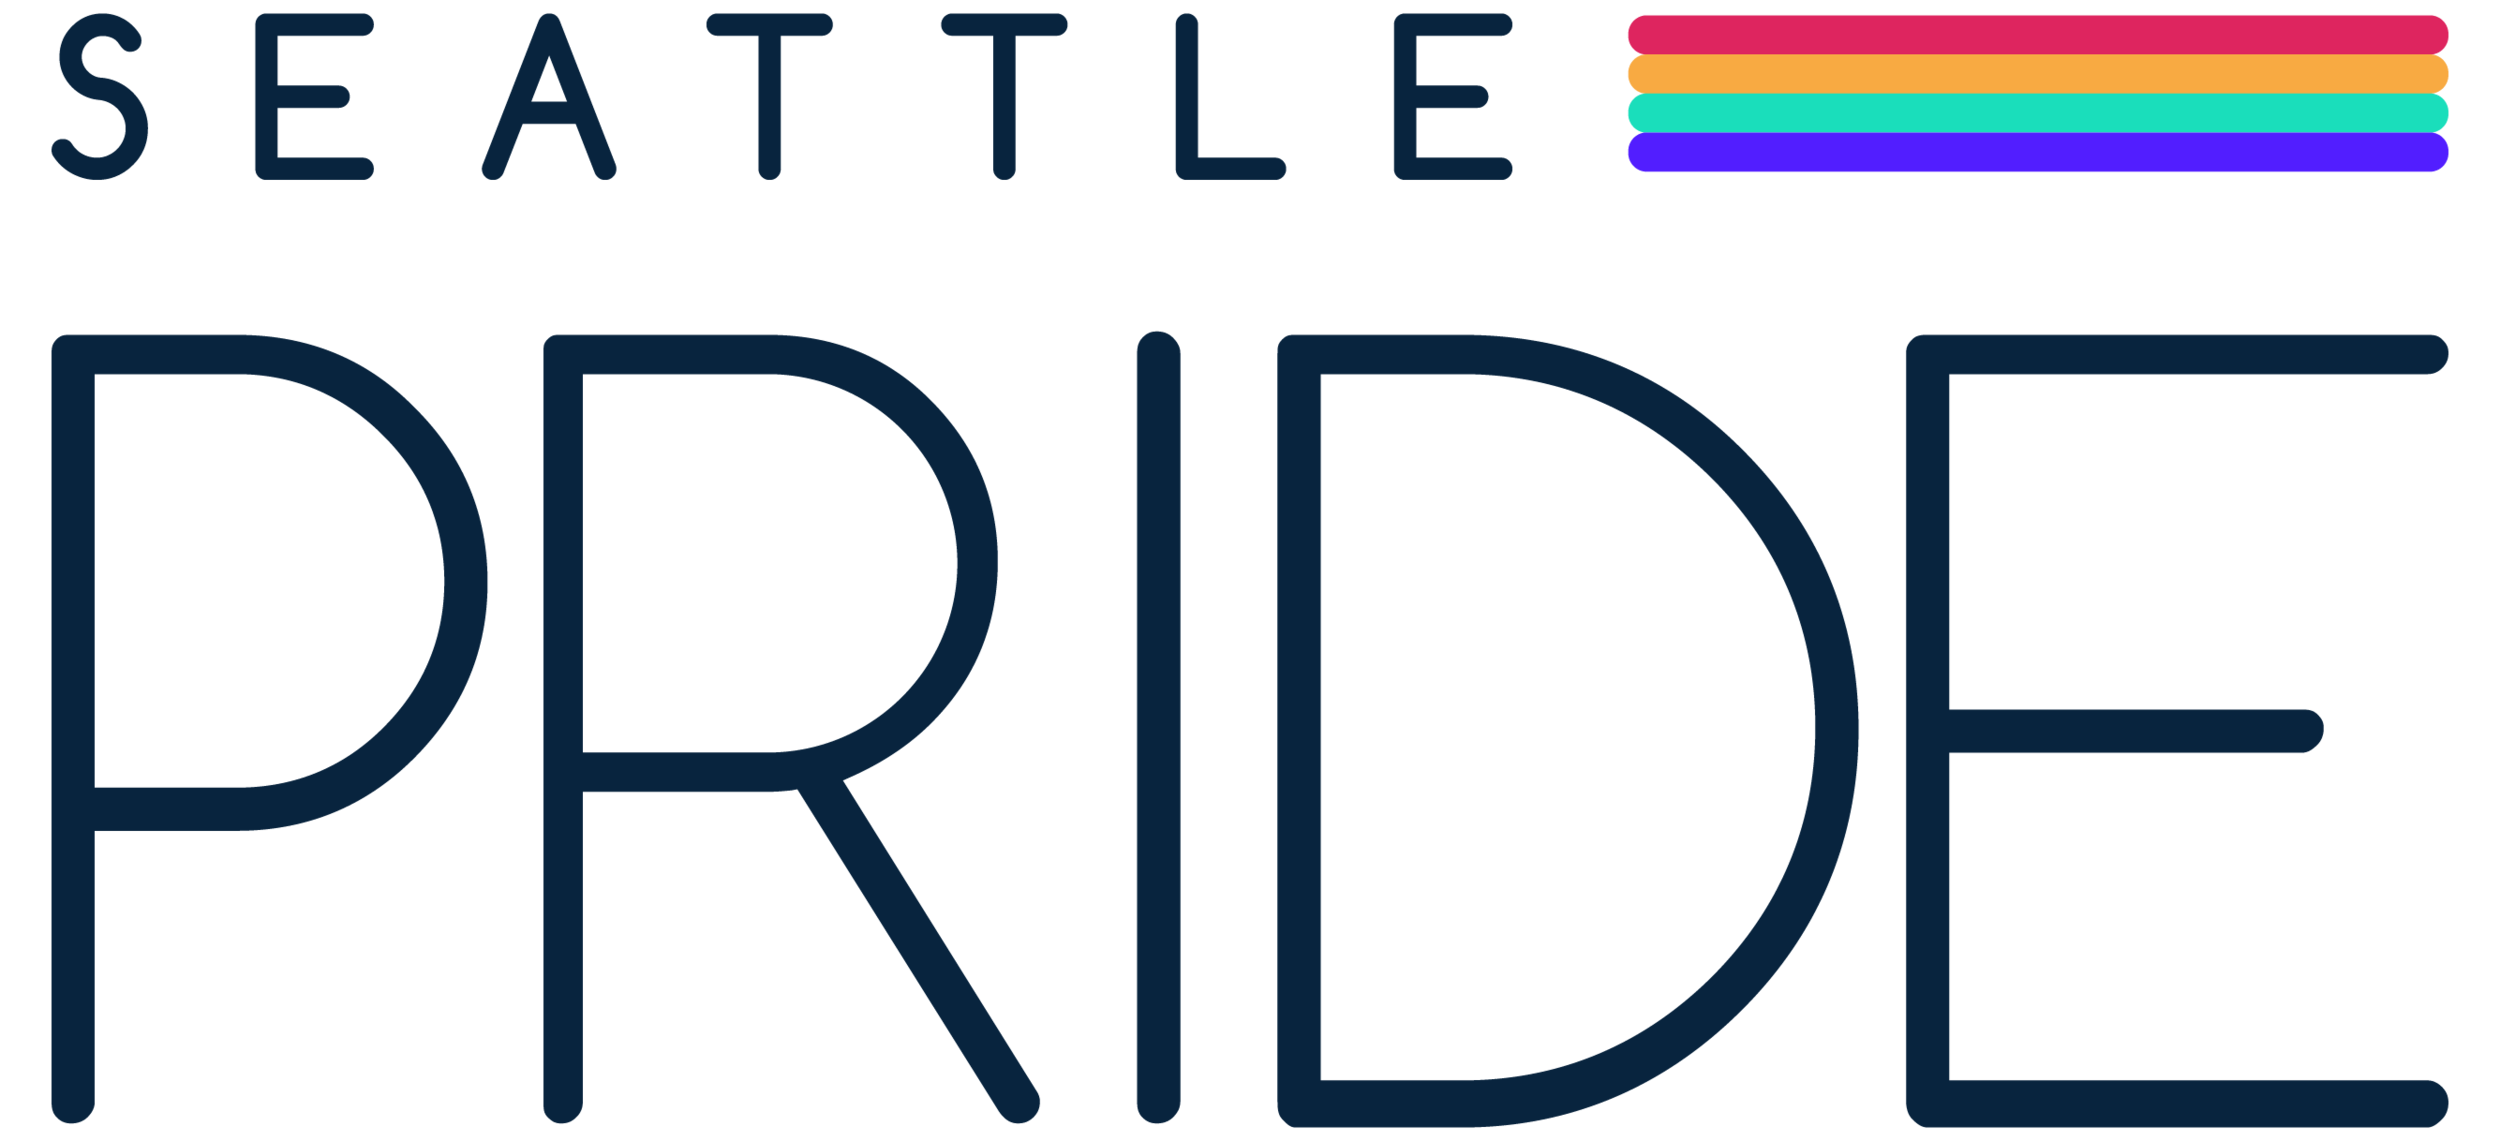 Seattle Pride Logo_Color RGB.png